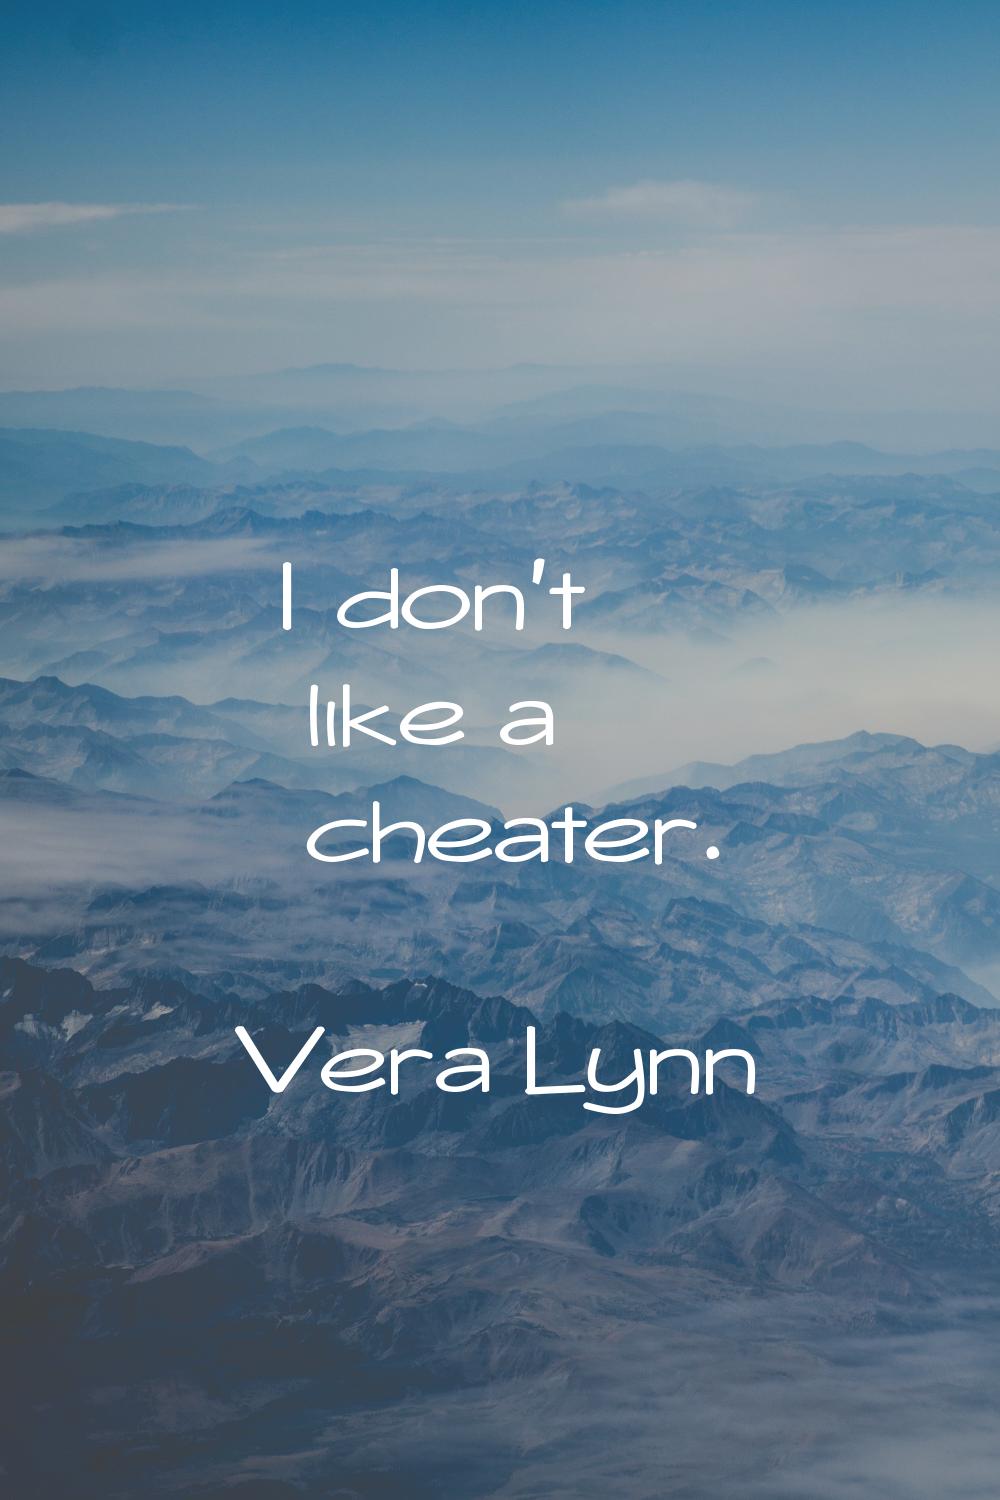 I don't like a cheater.